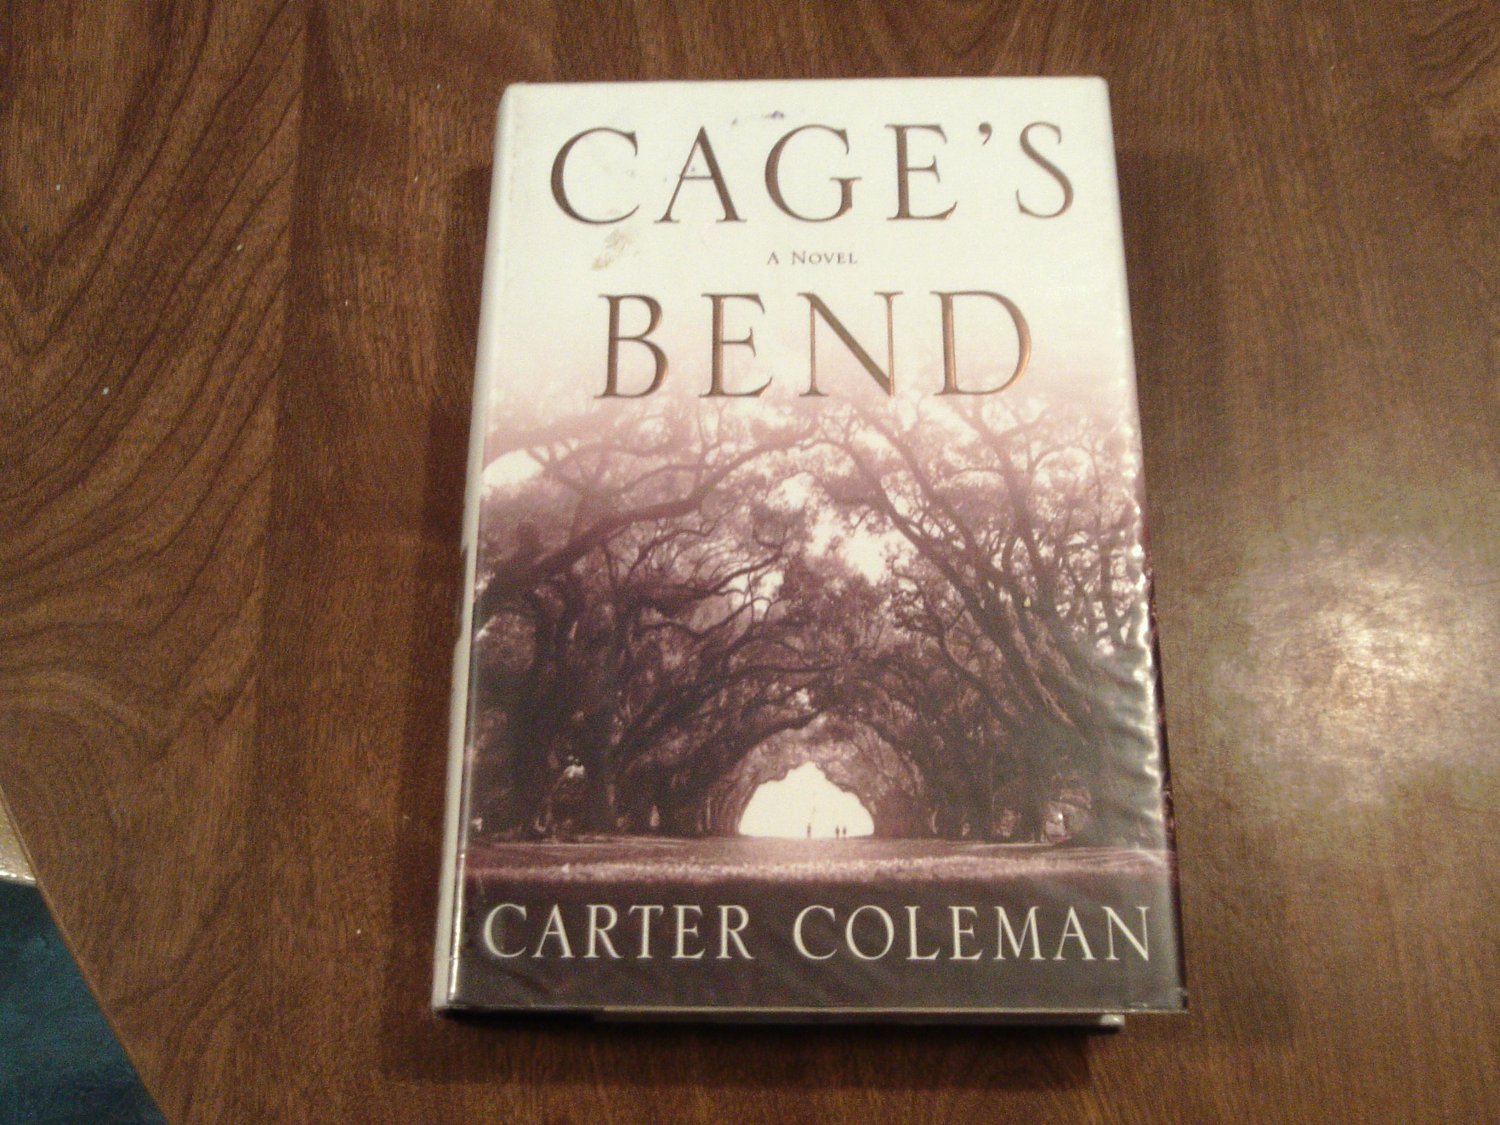 Cage's Bend by Carter Coleman (2005) (G6AZ) Psychological Fiction, Domestic Fiction